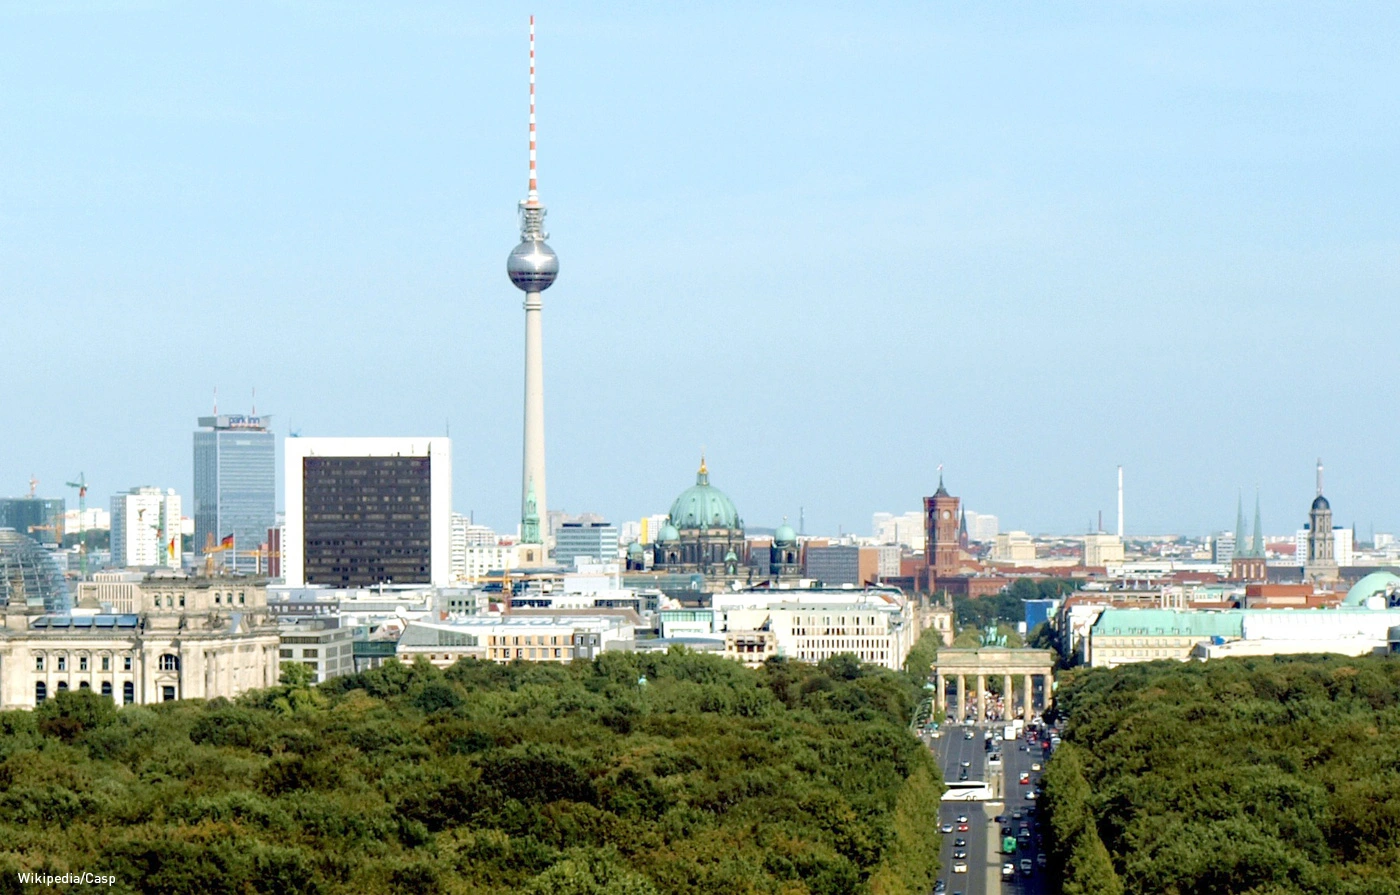 Berlin Skyline mit Fernsehturm. Wikipedia/Casp